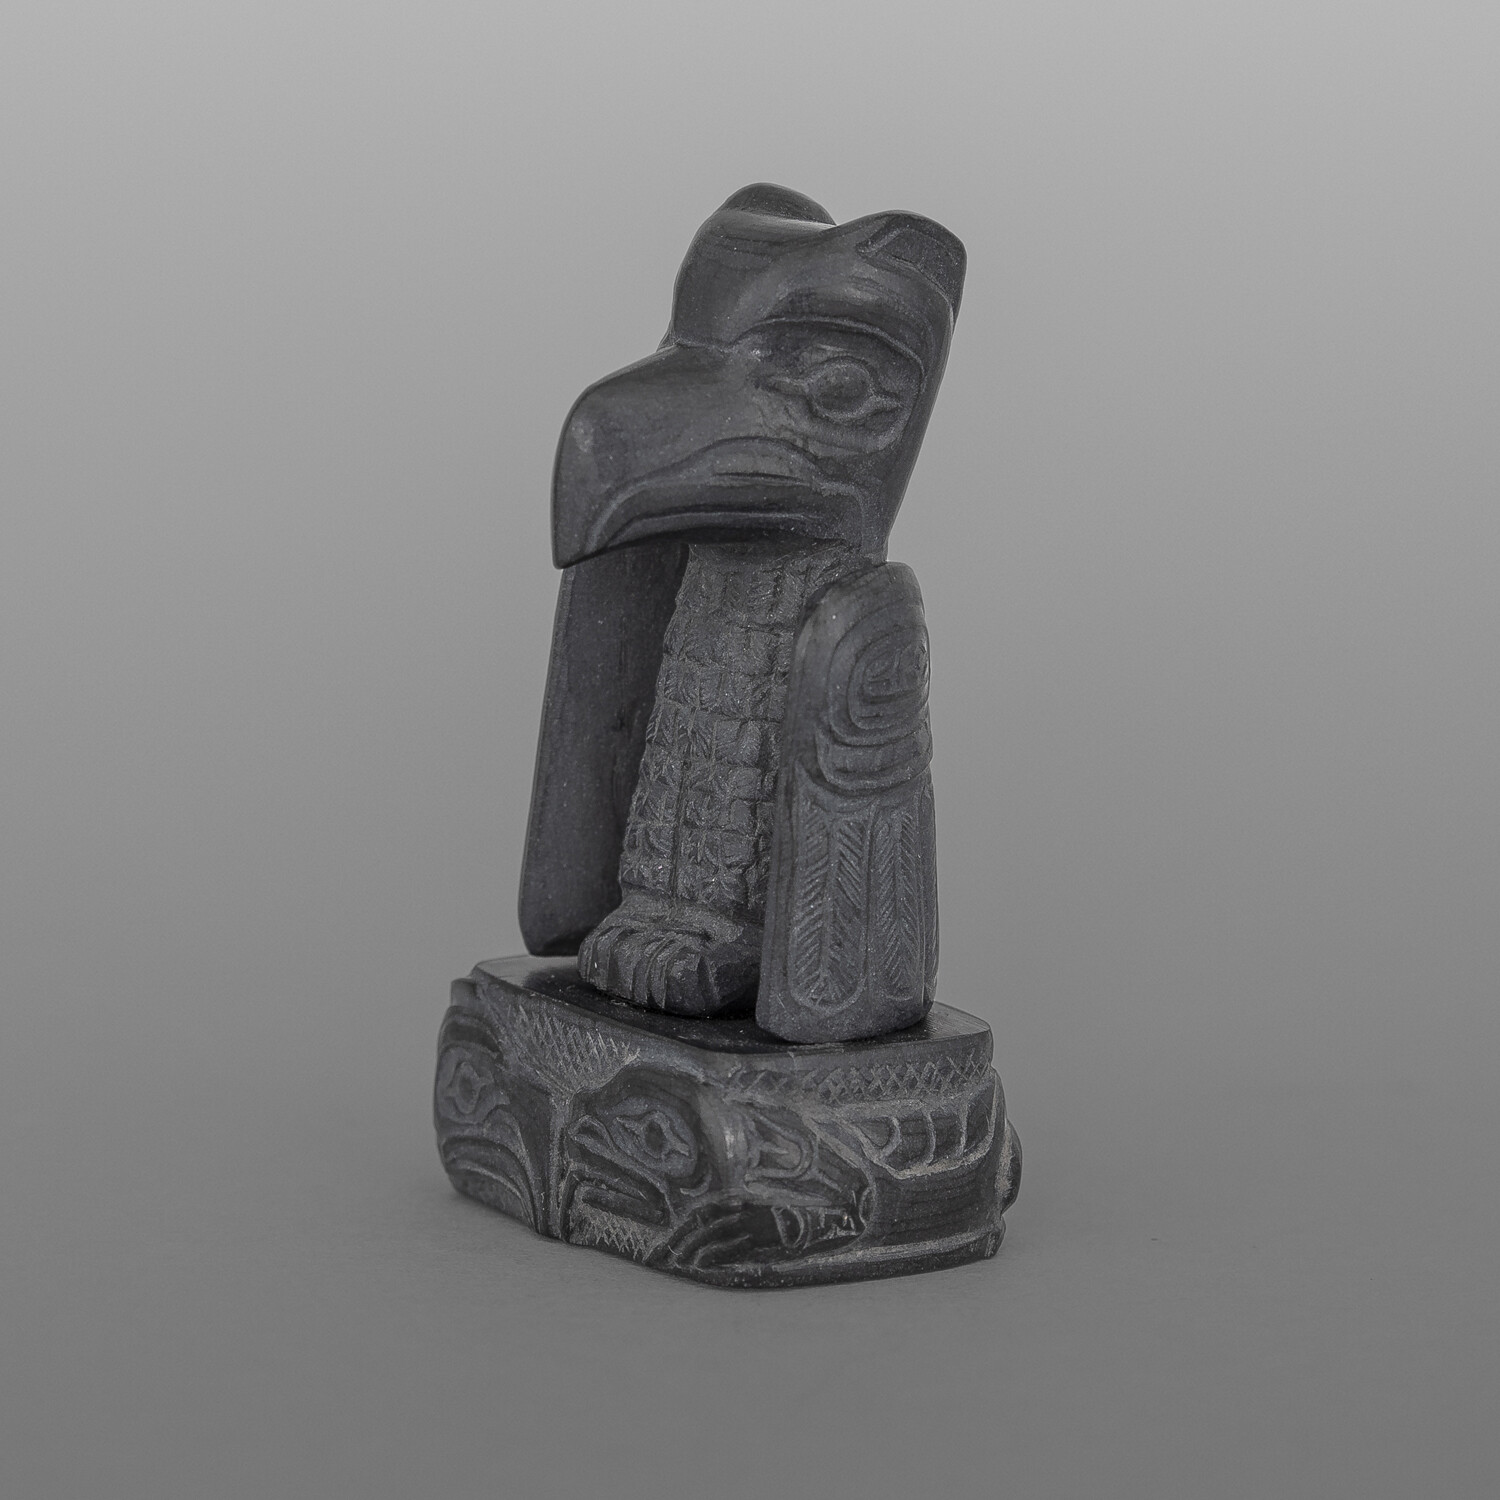 Eagle & Frog Totem
Melanie Russ
Haida
Argillite
2½” x ¾” x ½”
$400